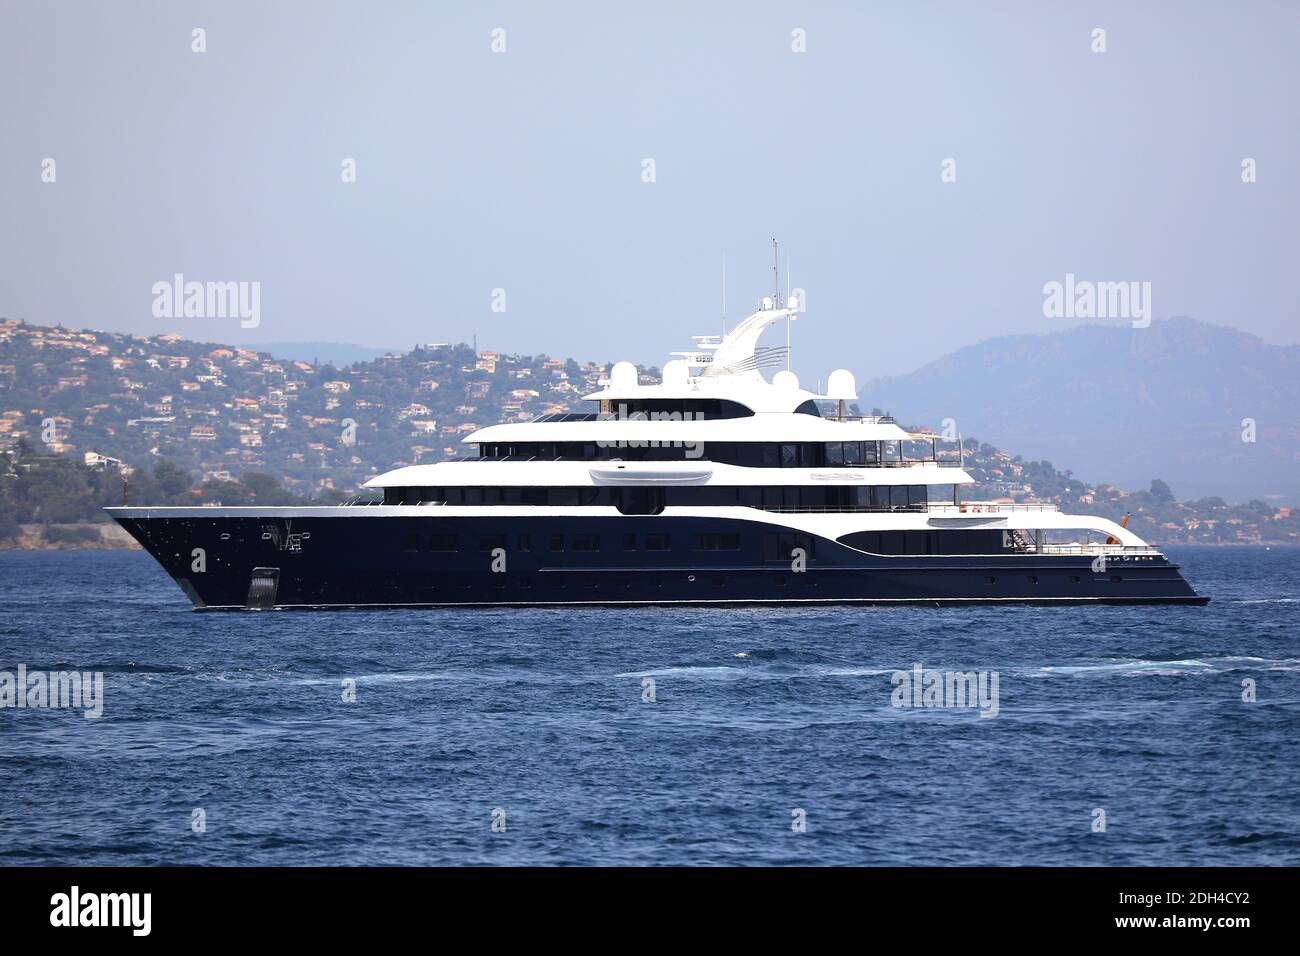 A Palinuro il super yacht di Bernard Arnault, il proprietario di